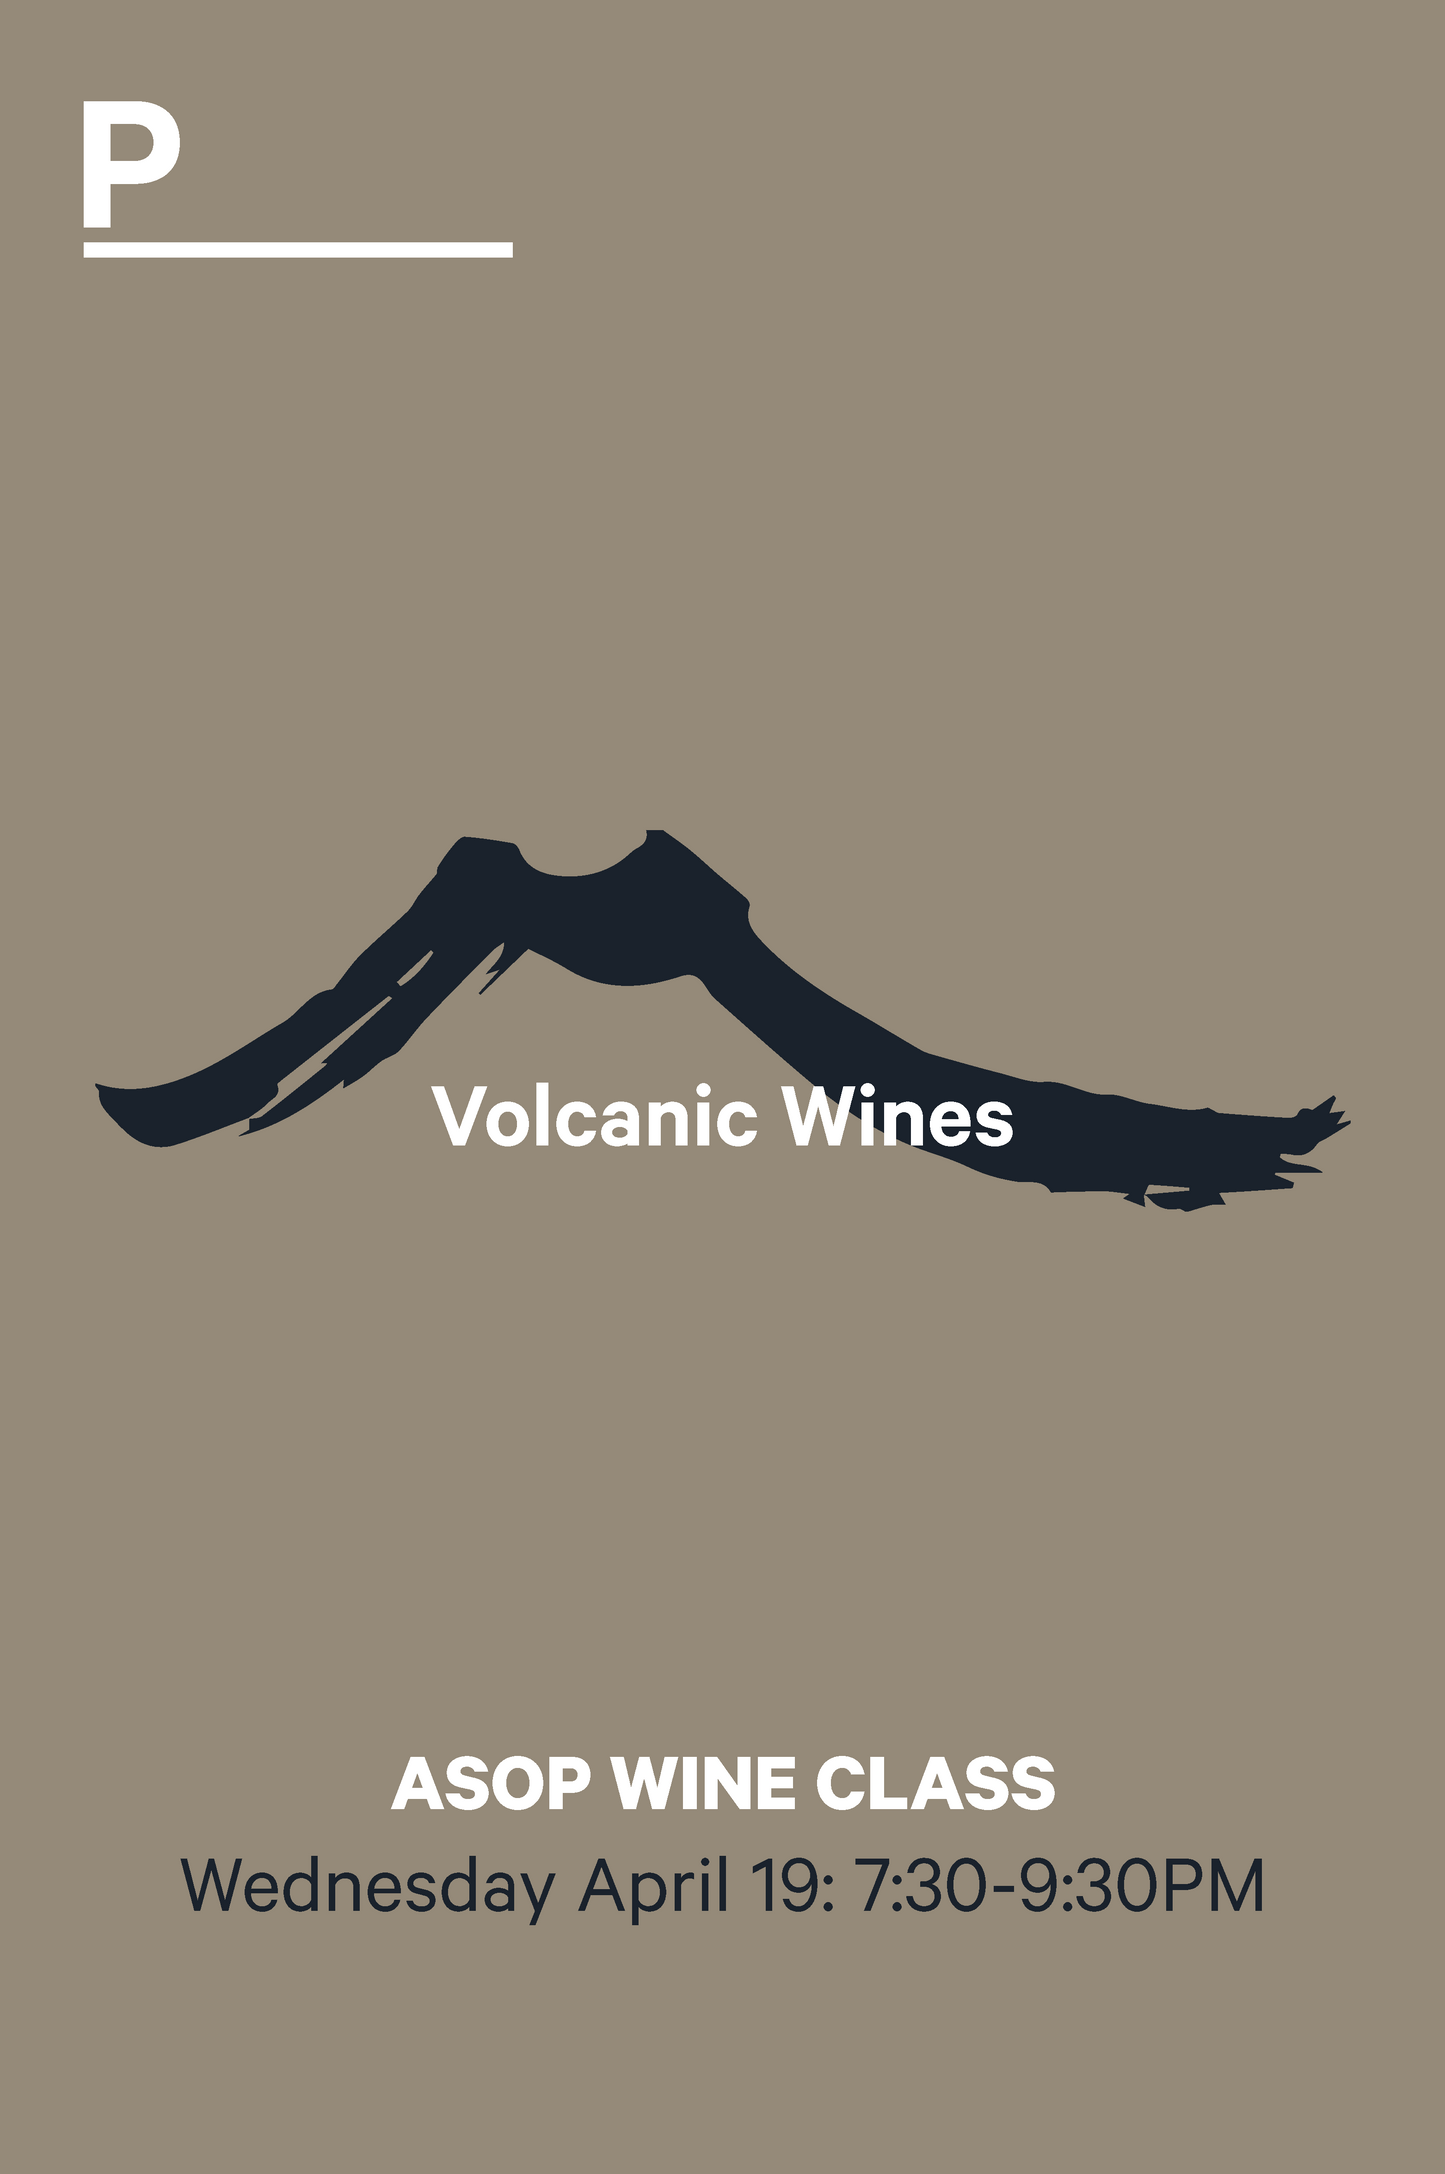 ASOP Wine Class: Volcanic Wines